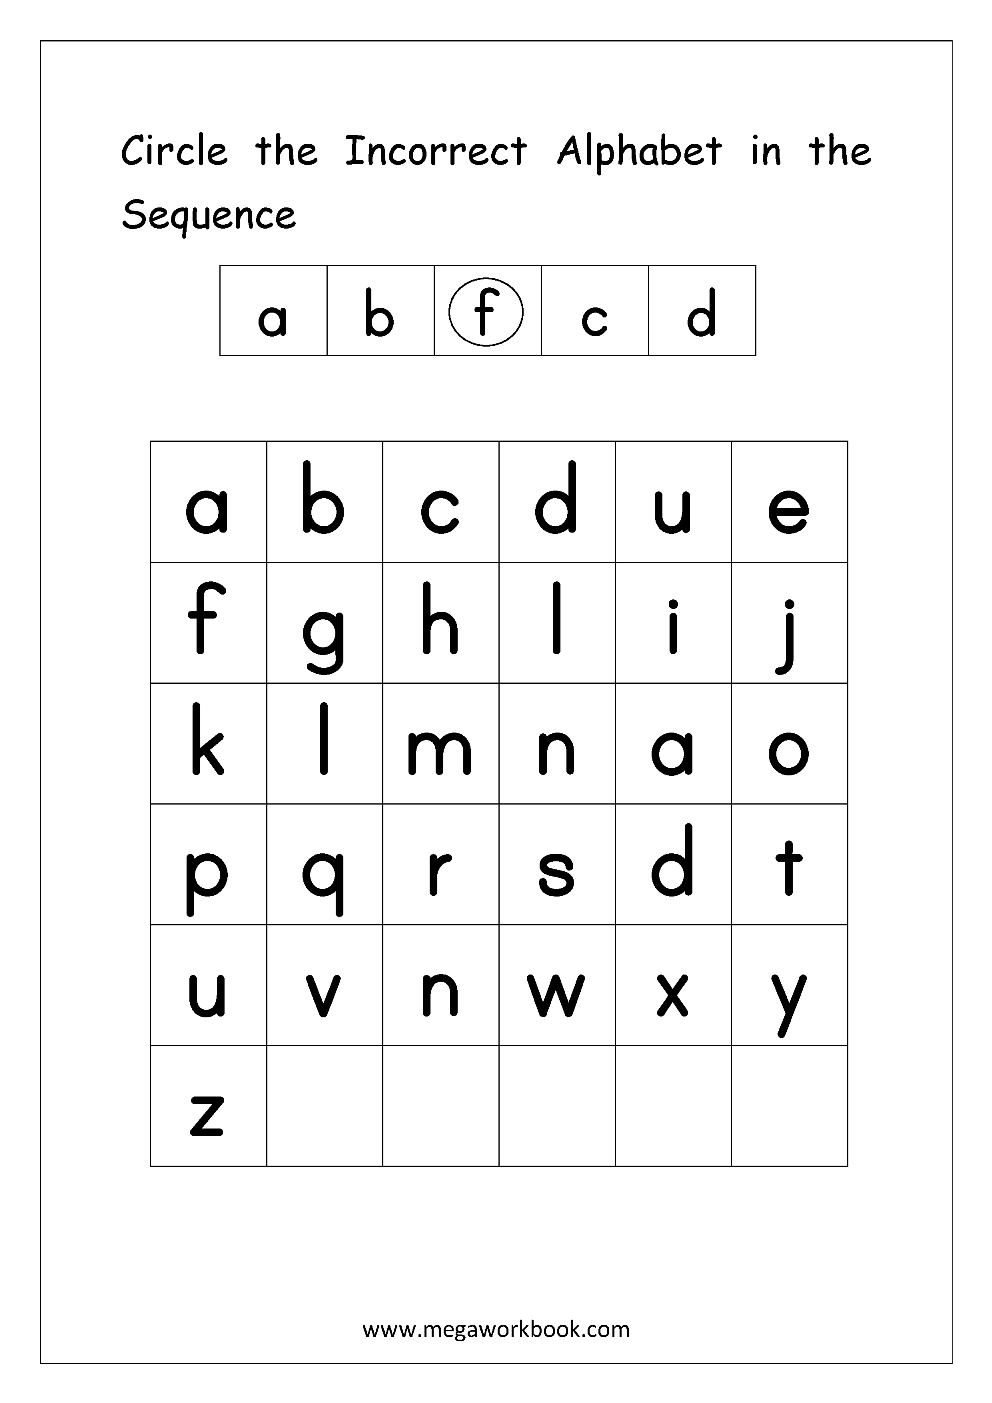 Free Printable Alphabet Sudoku Puzzles